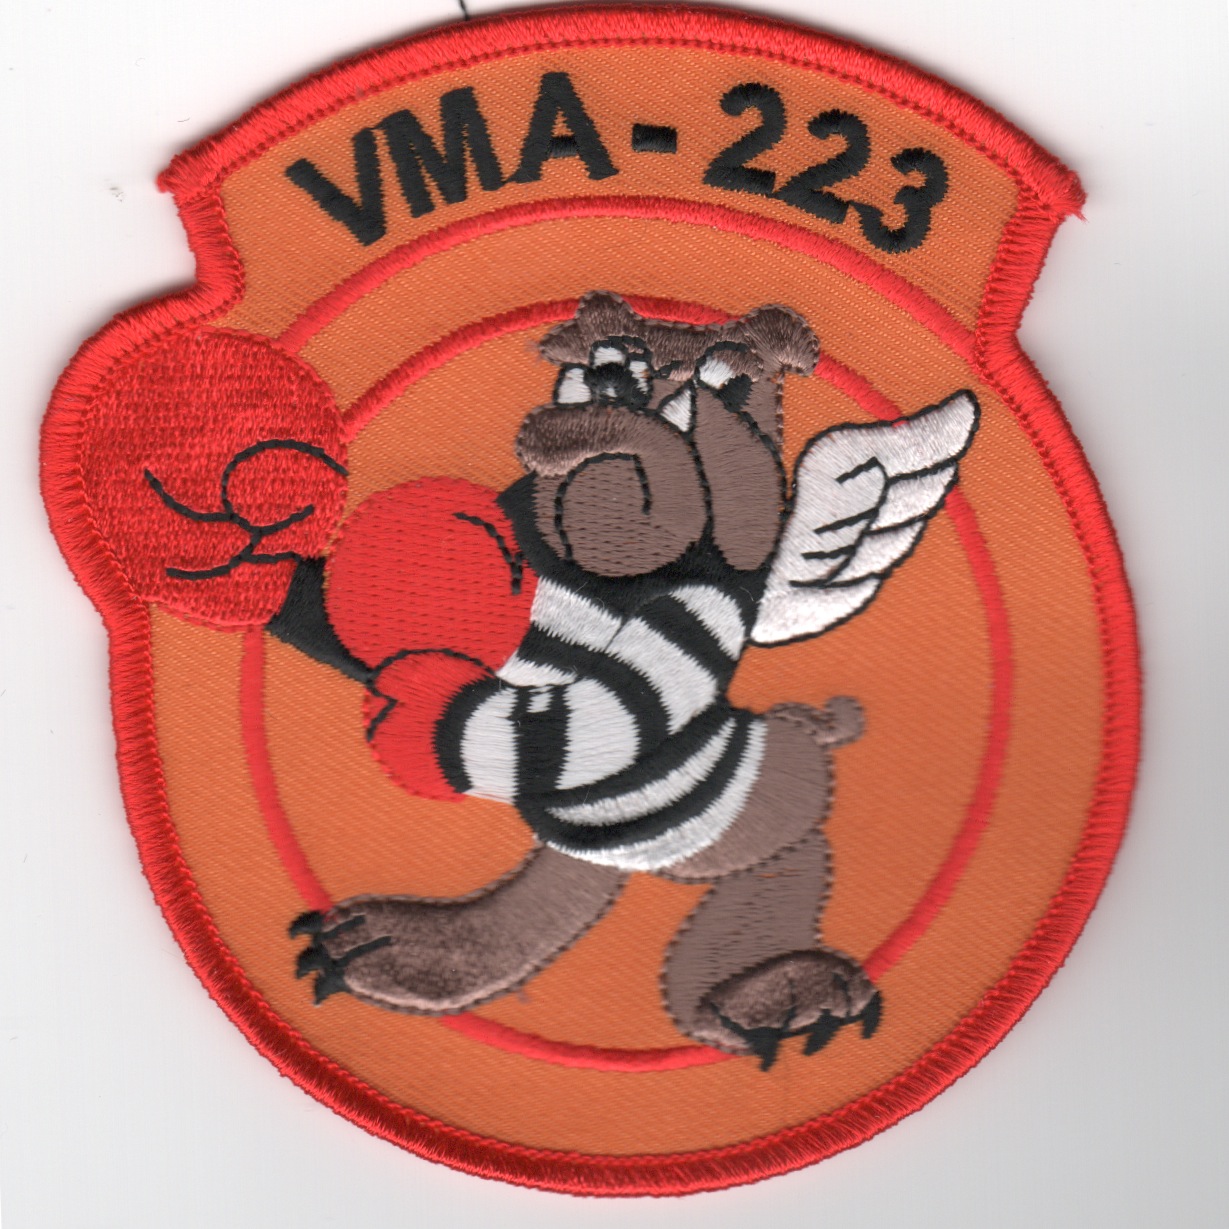 VMA-223 Boxing Bulldog Patch